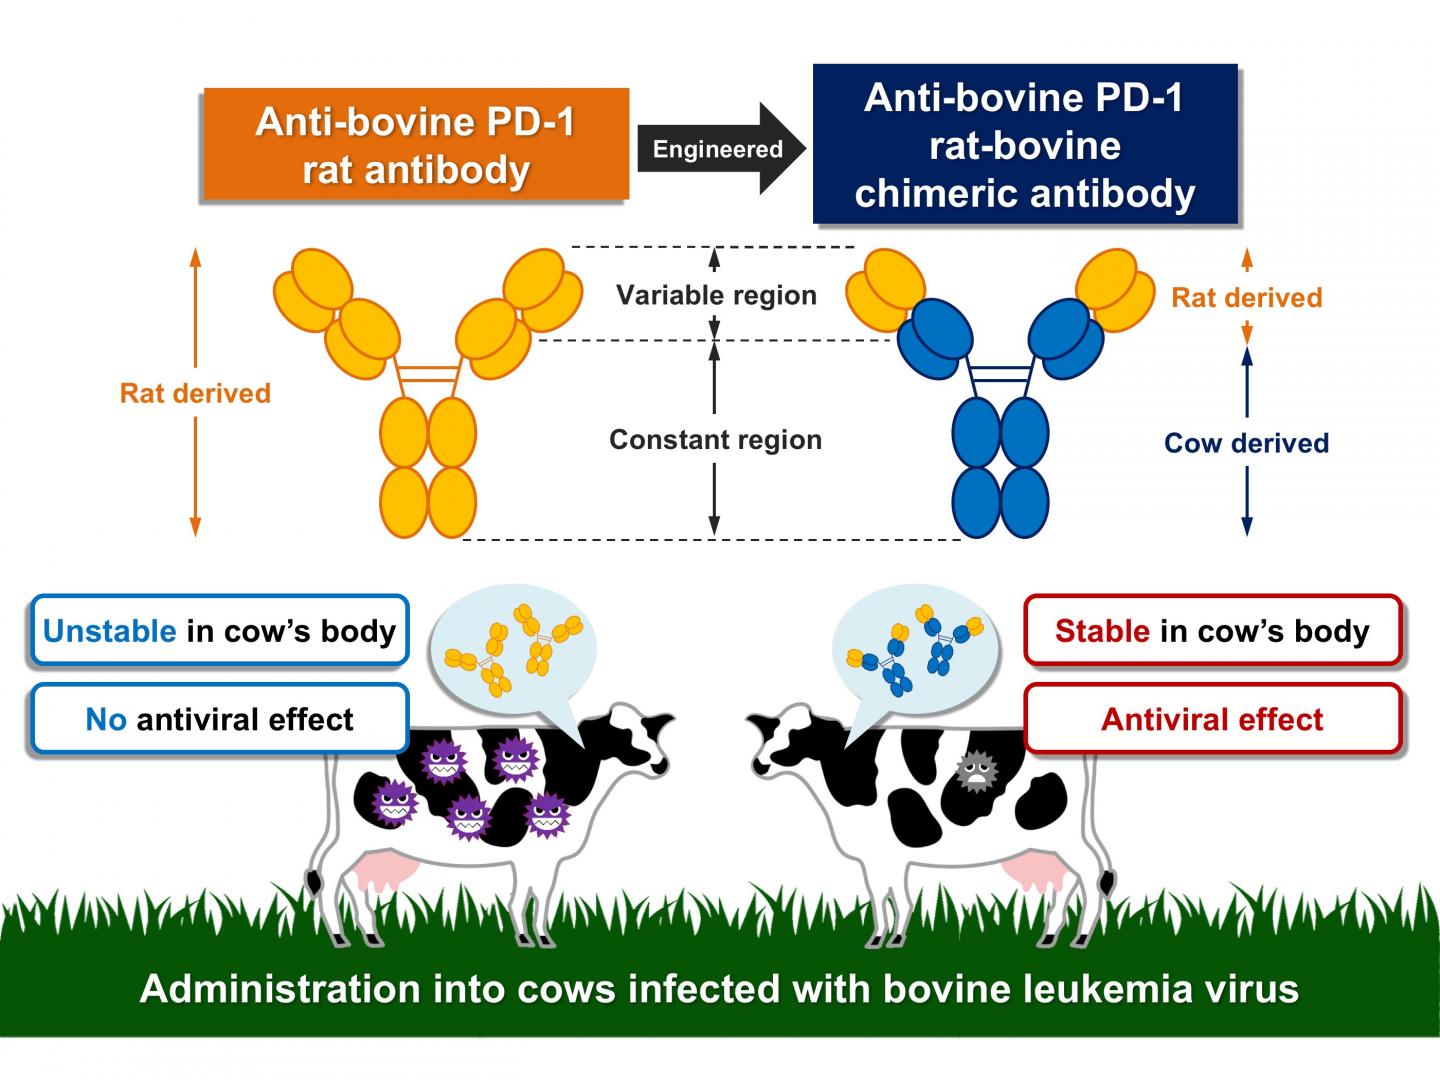 A Newly Developed Chimeric Antibody